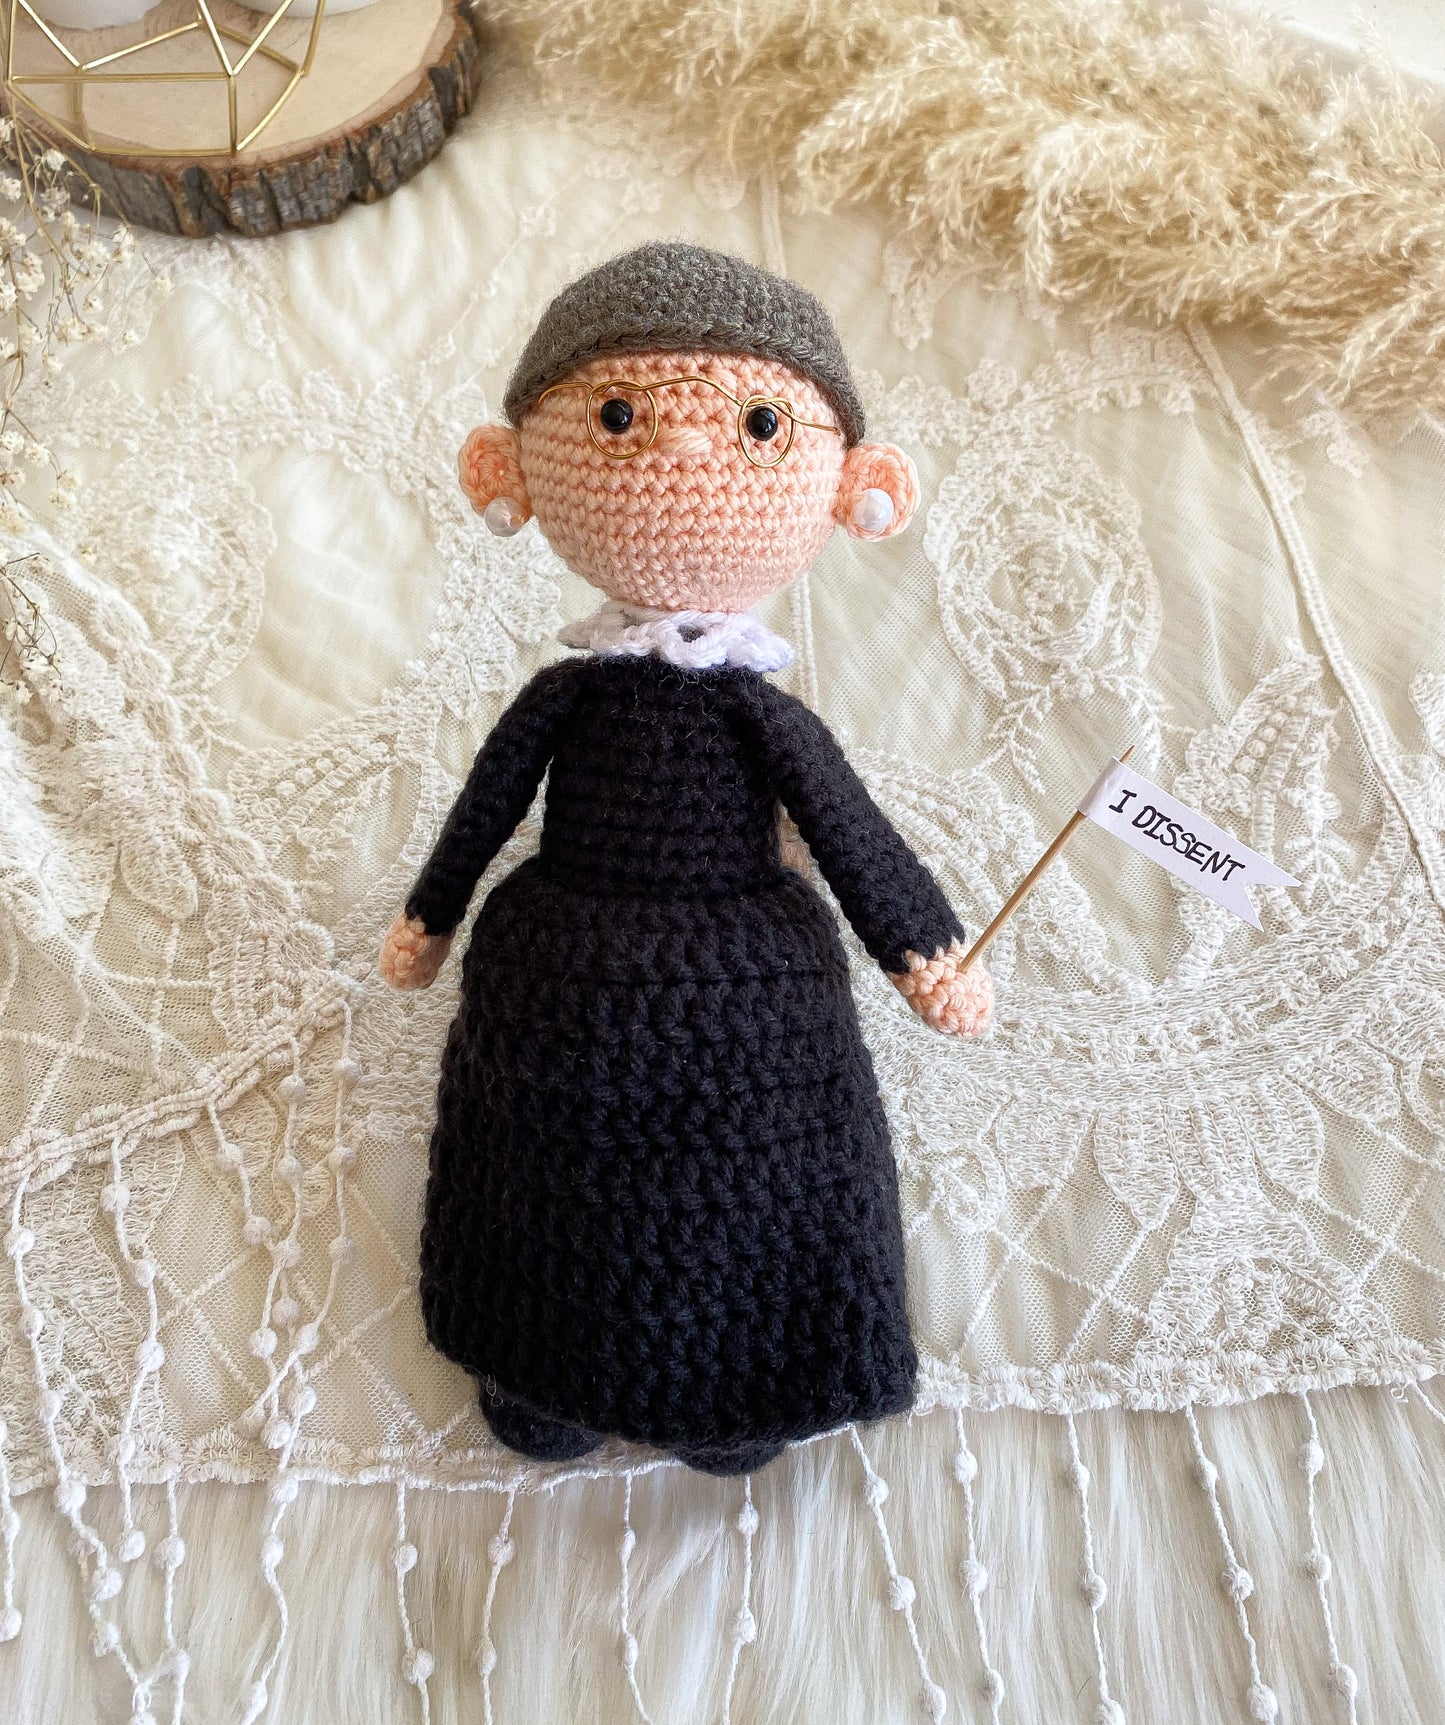 Ruth Bader Ginsburg “I dissent” crocheted doll (custom order)